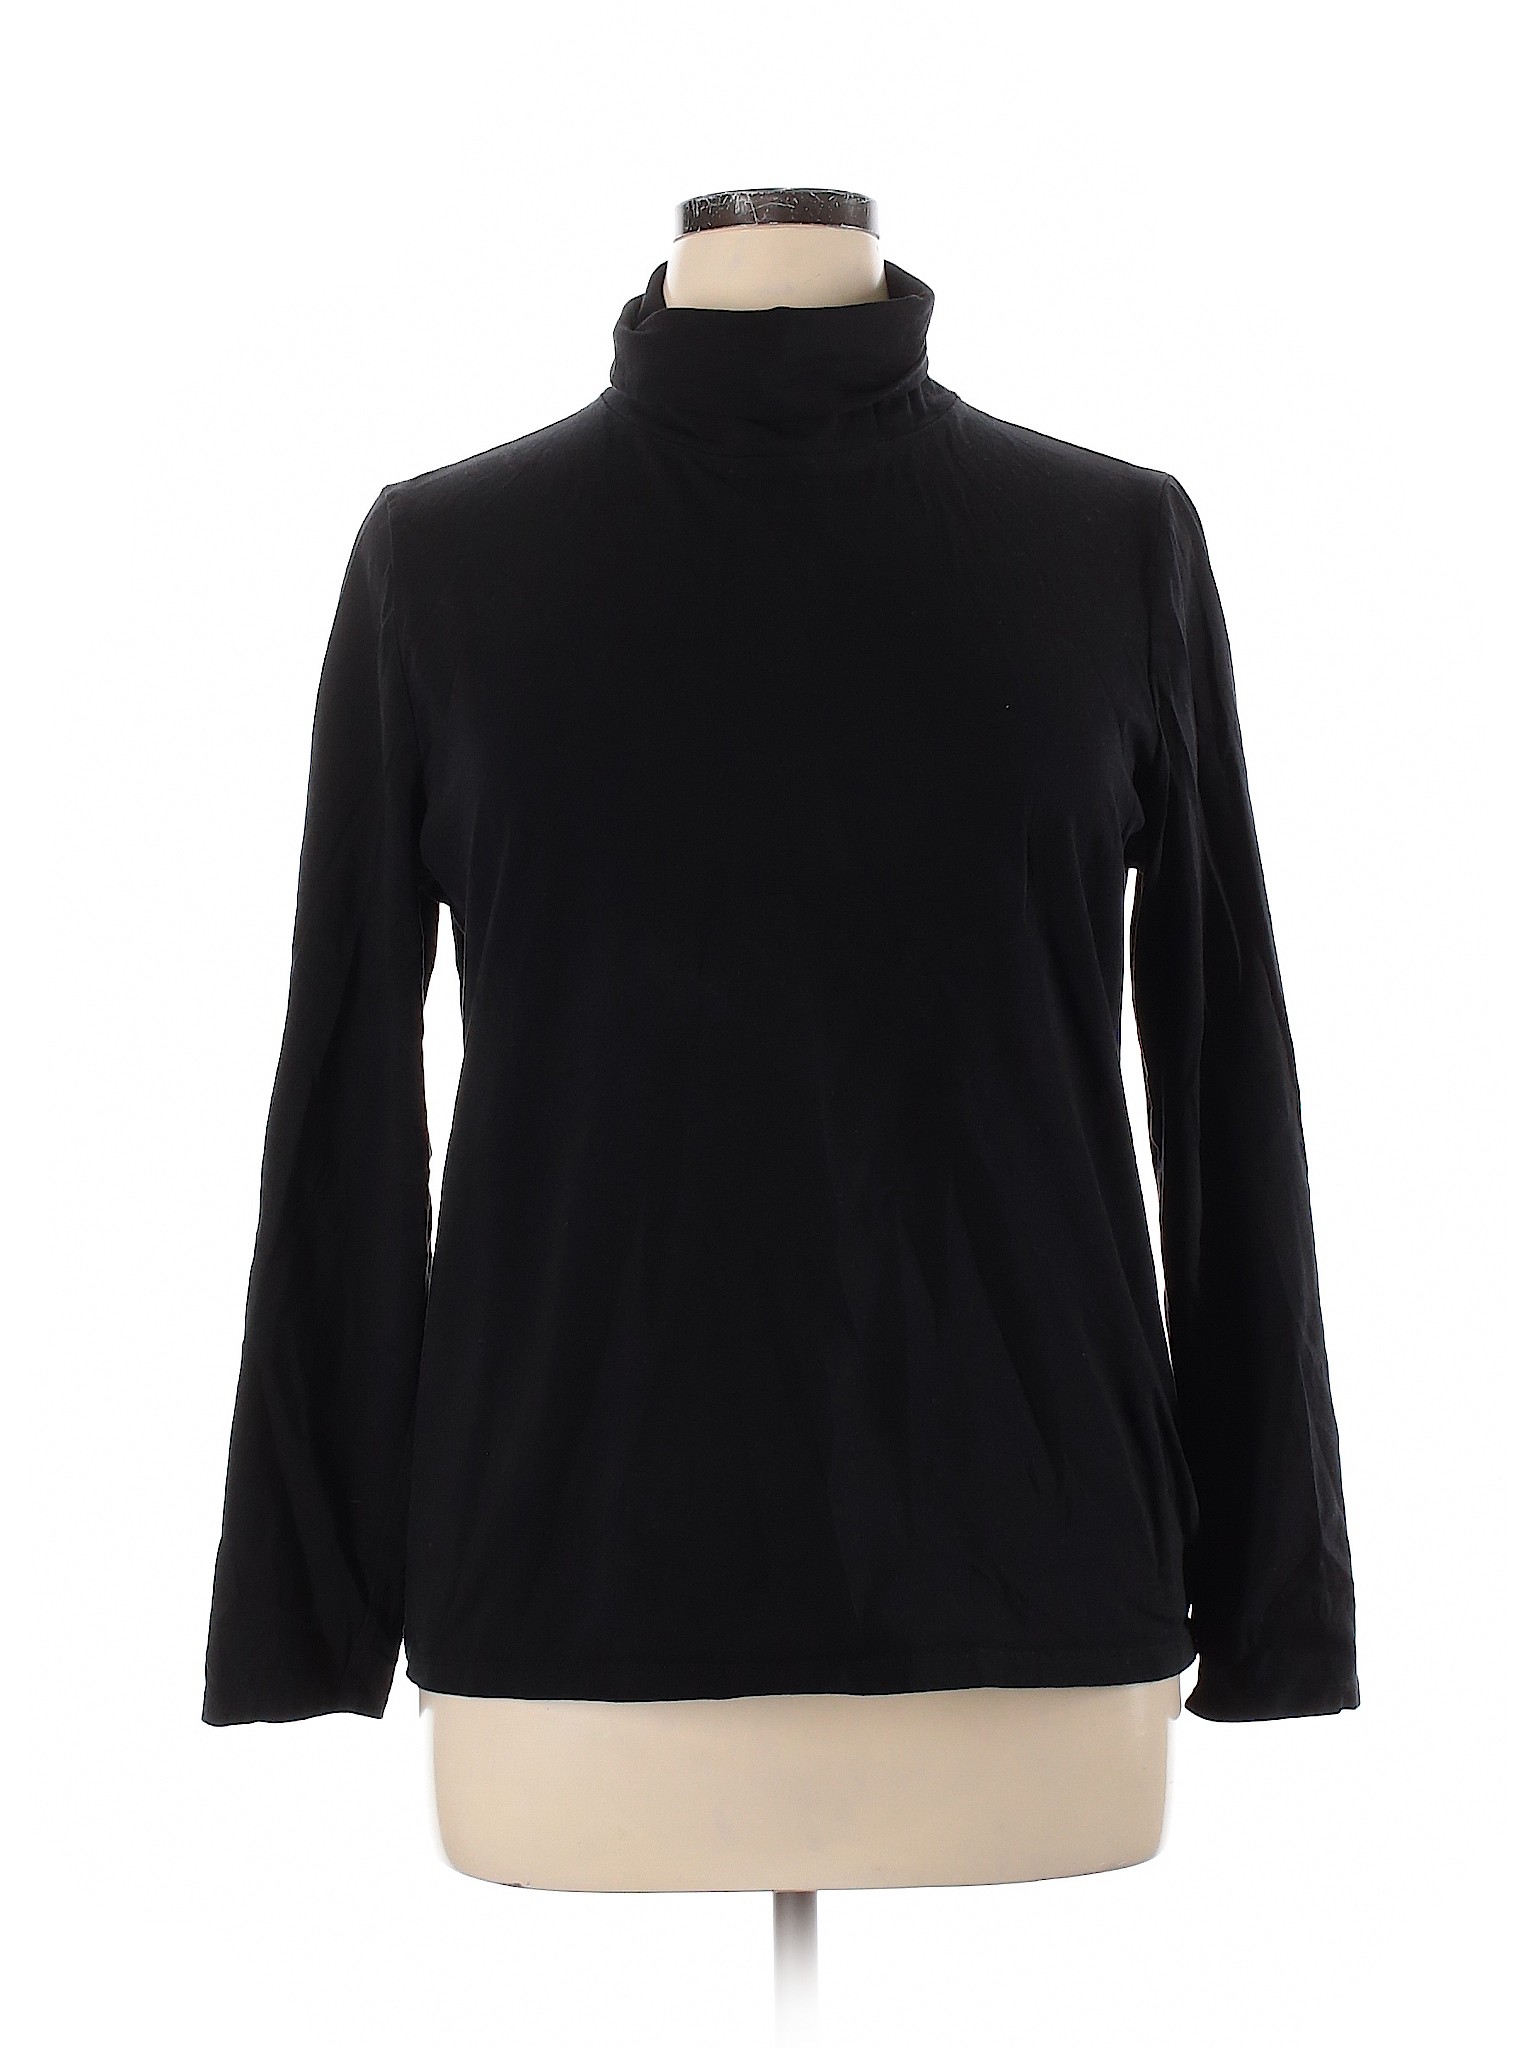 Talbots Women Black Long Sleeve Turtleneck XL | eBay